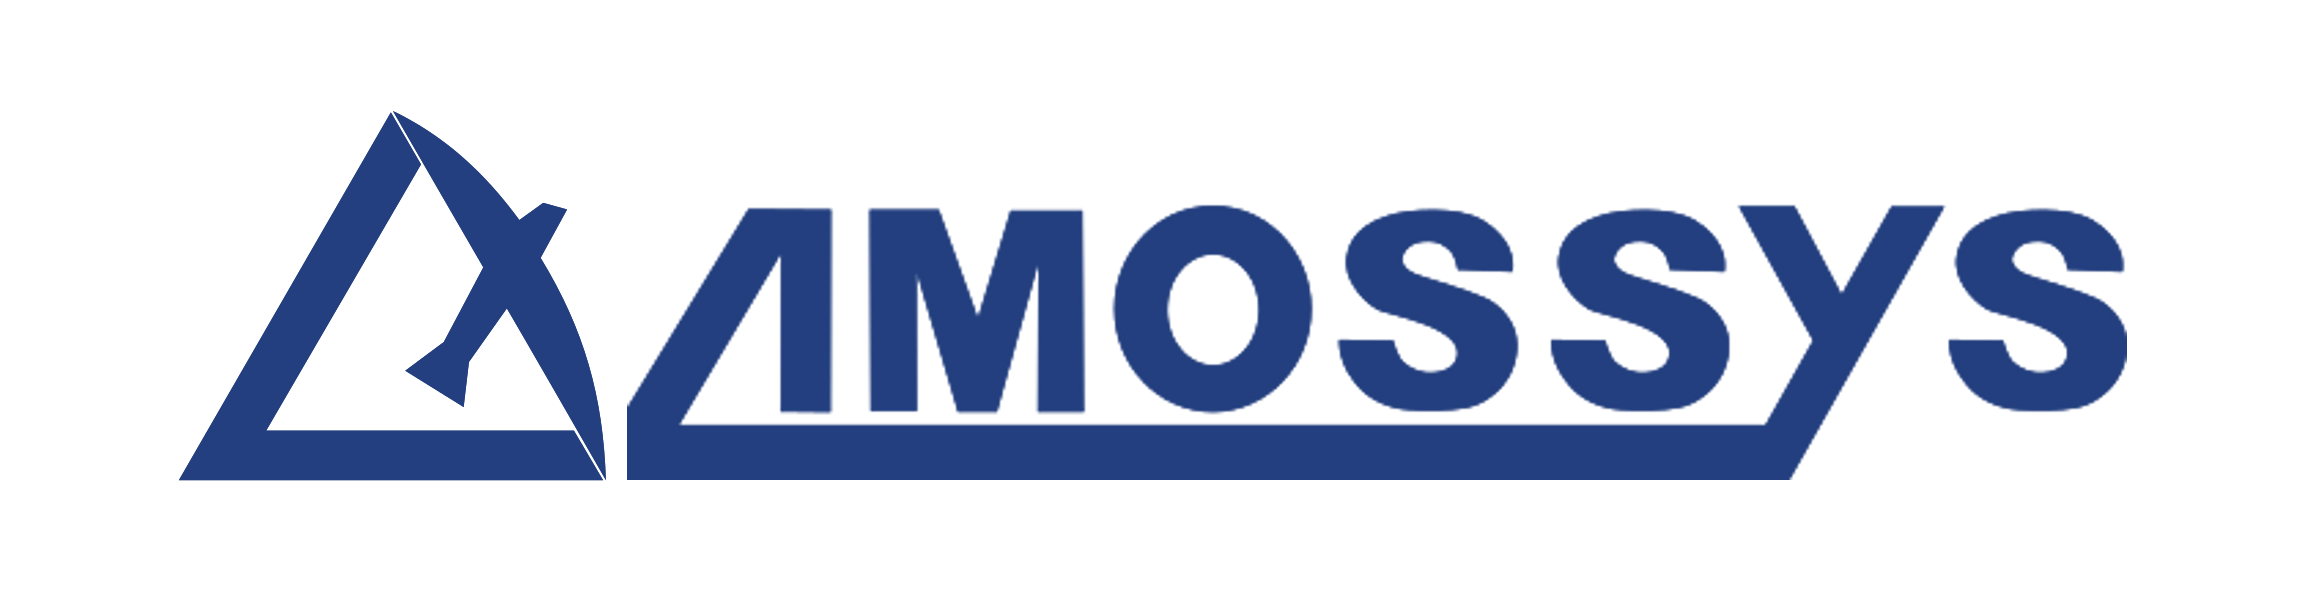 Amossys logo